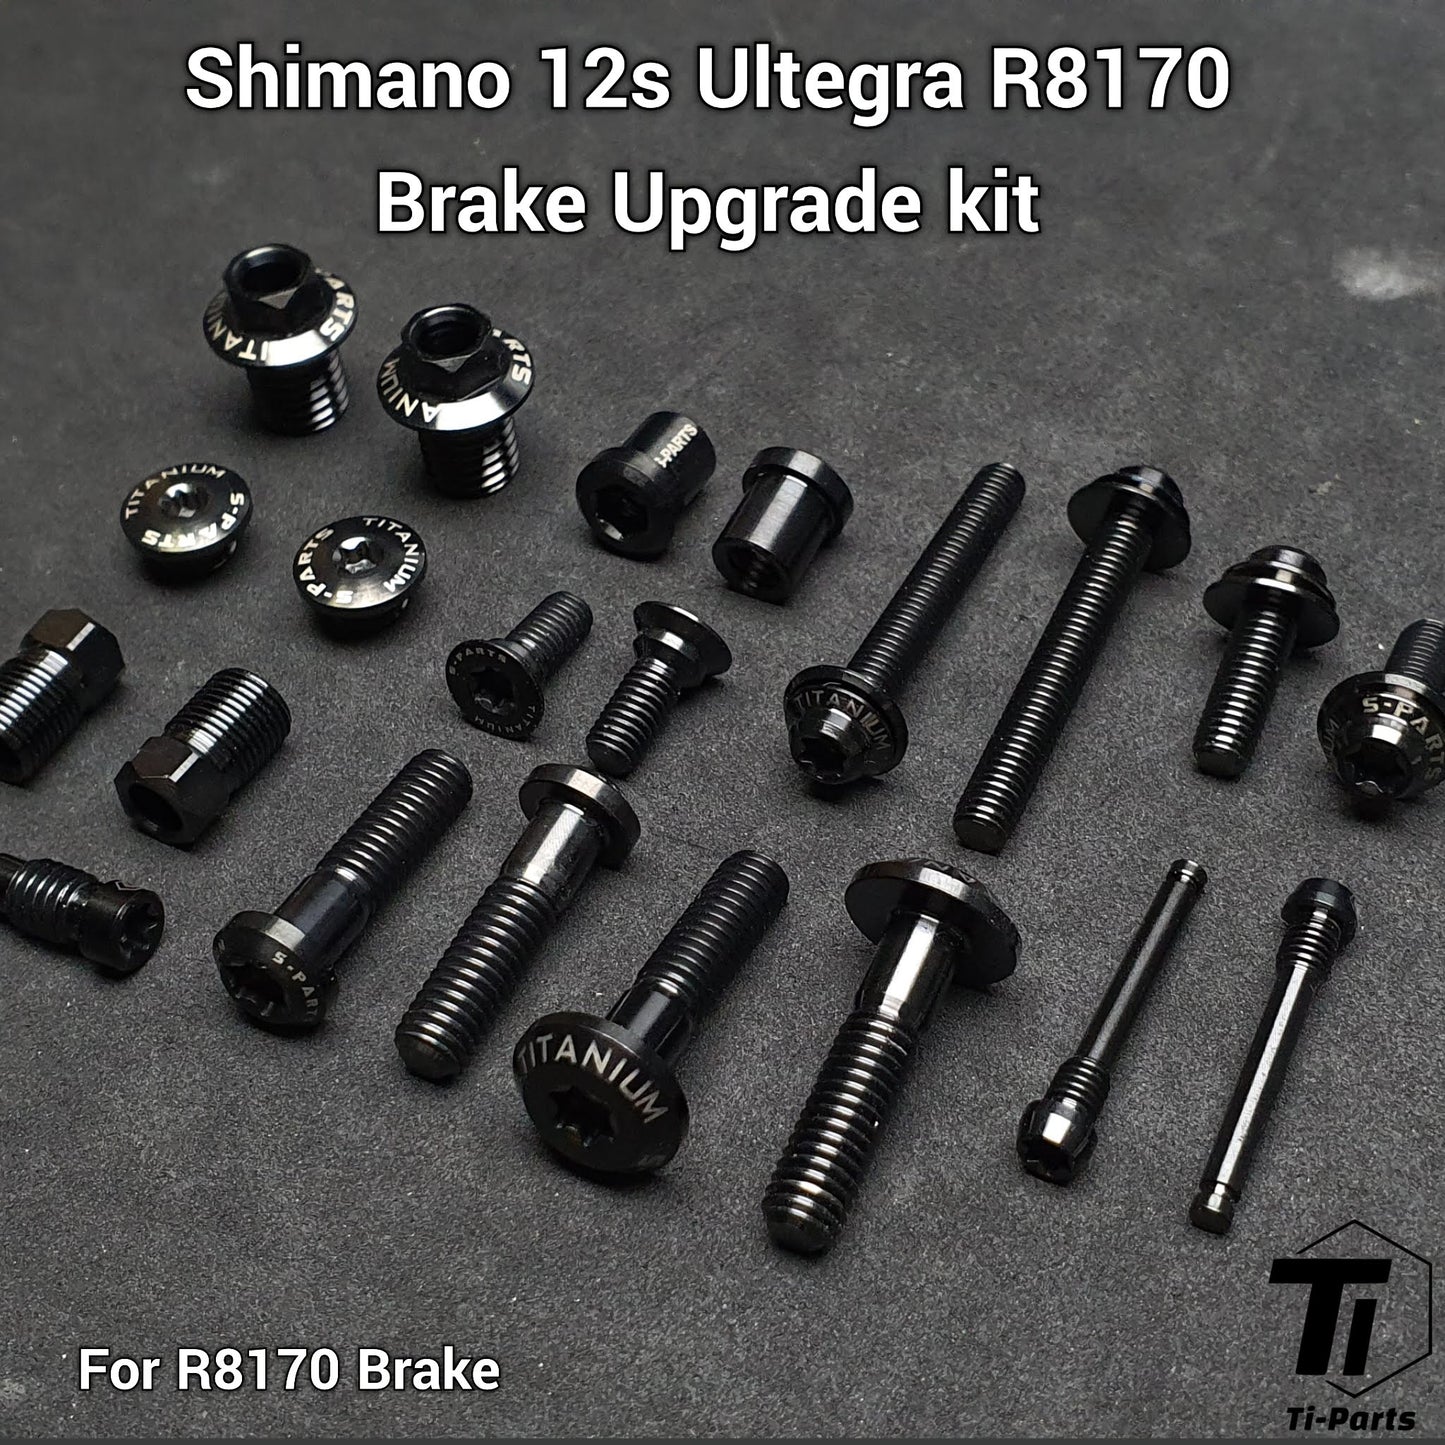 Kit de actualización de titanio para R9270 R8170 R7170 Shimano | Dura Ace Ultegra 105 12s R9200 R9250 R8150 Freno de transmisión | Tornillo de titanio